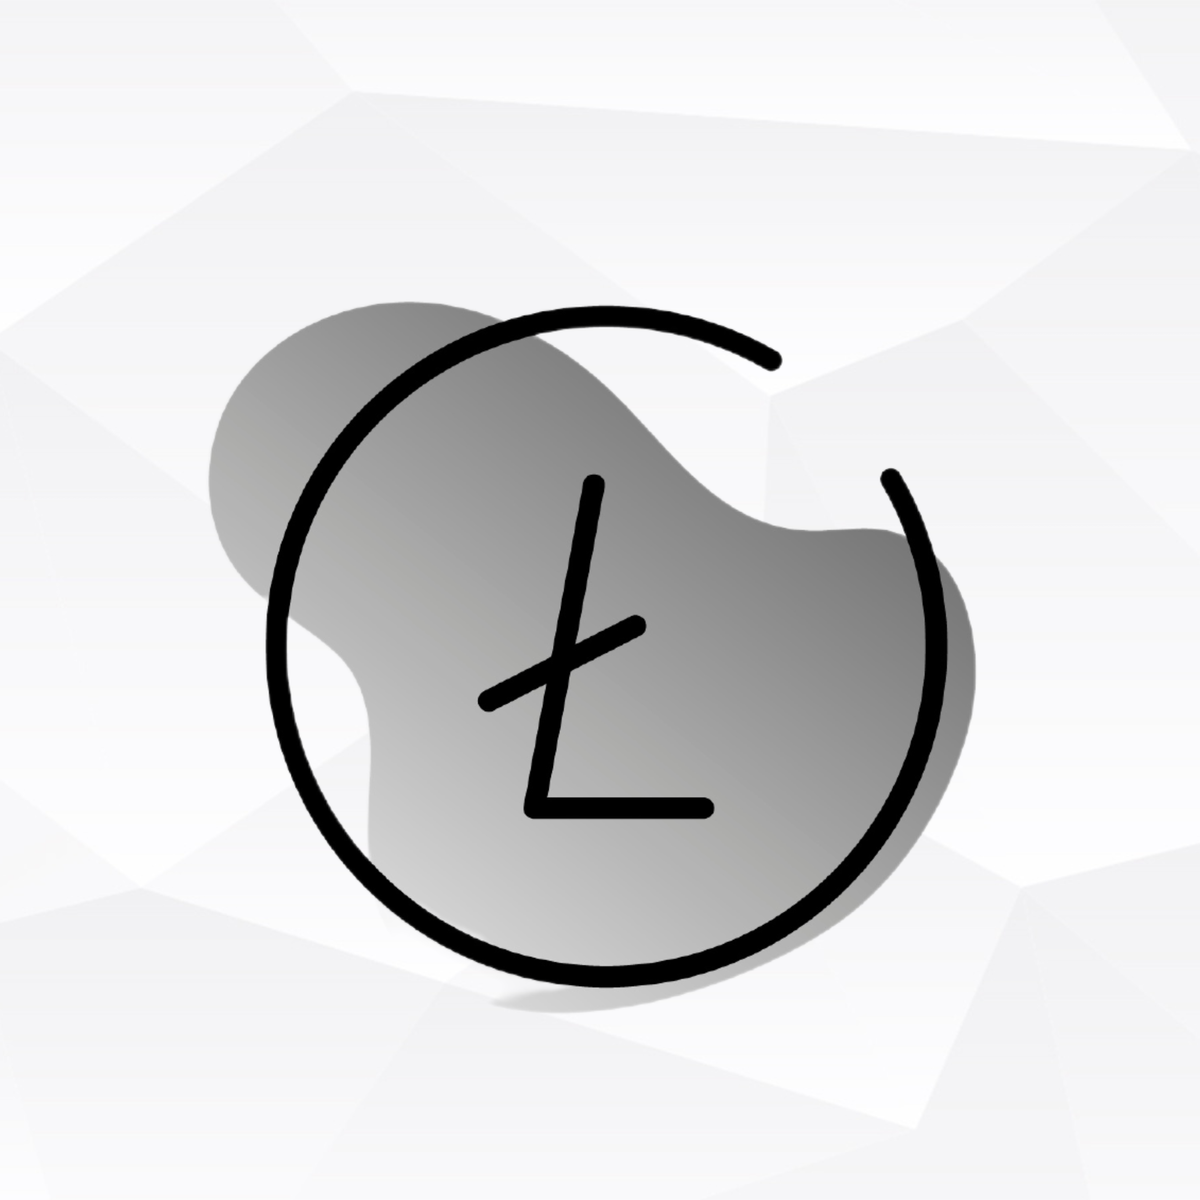 LTC (Litecoin)